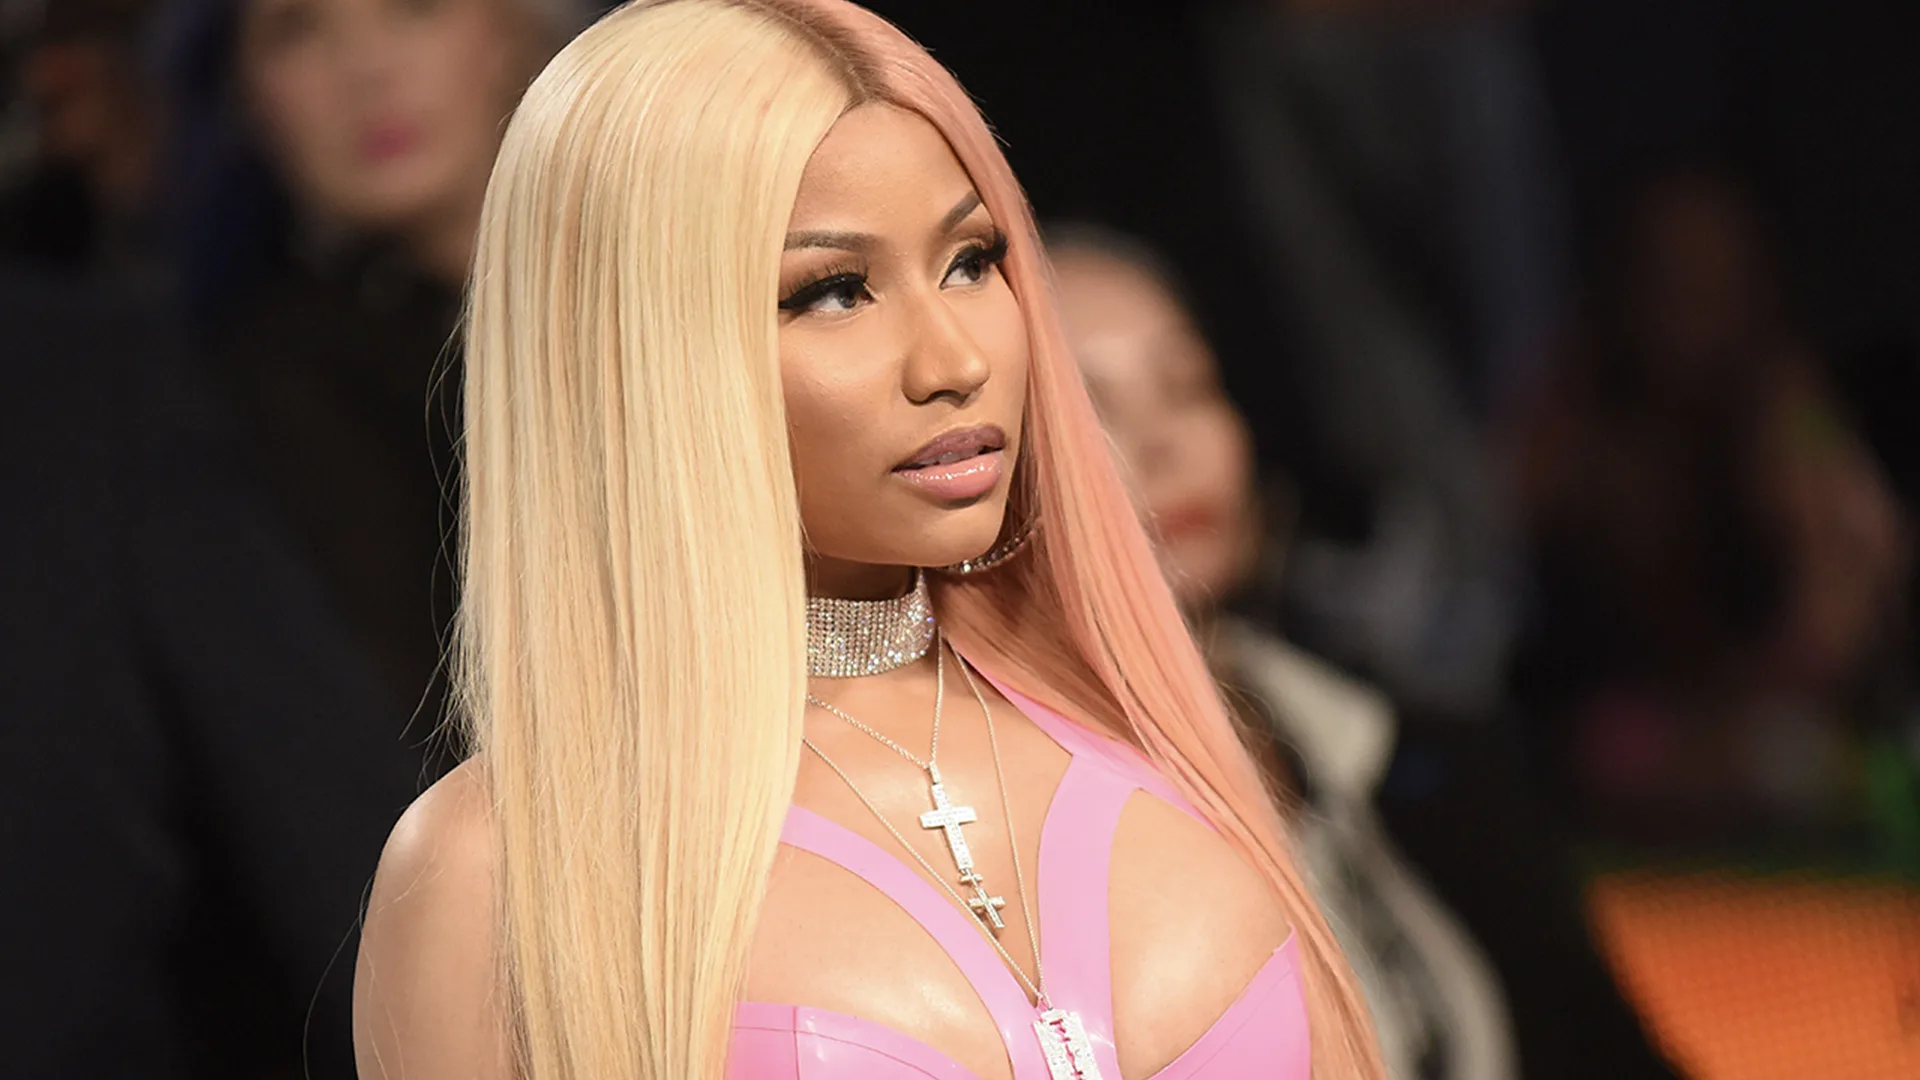 Nicki Minaj wearing a pink outfit at a premiere